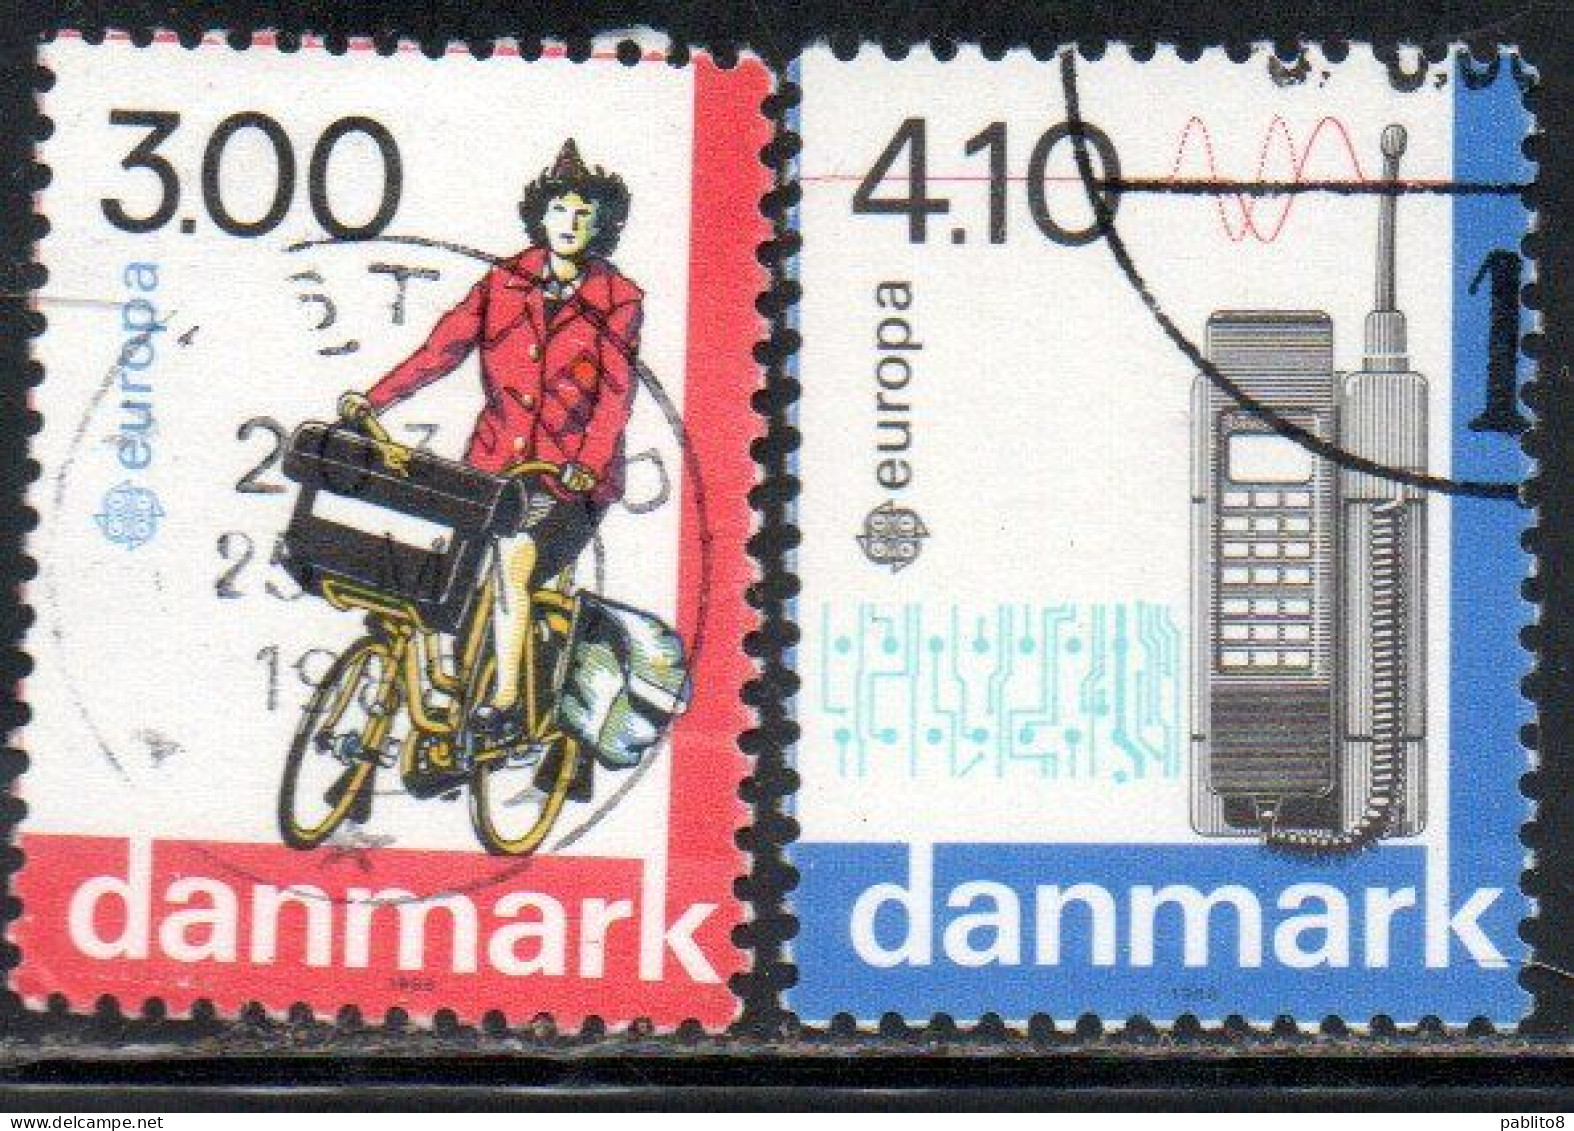 DANEMARK DANMARK DENMARK DANIMARCA 1988 EUROPA CEPT TRANSPORT AND COMMUNICATION COMPLETE SET SERIE USED USATO OBLITERE' - Usado